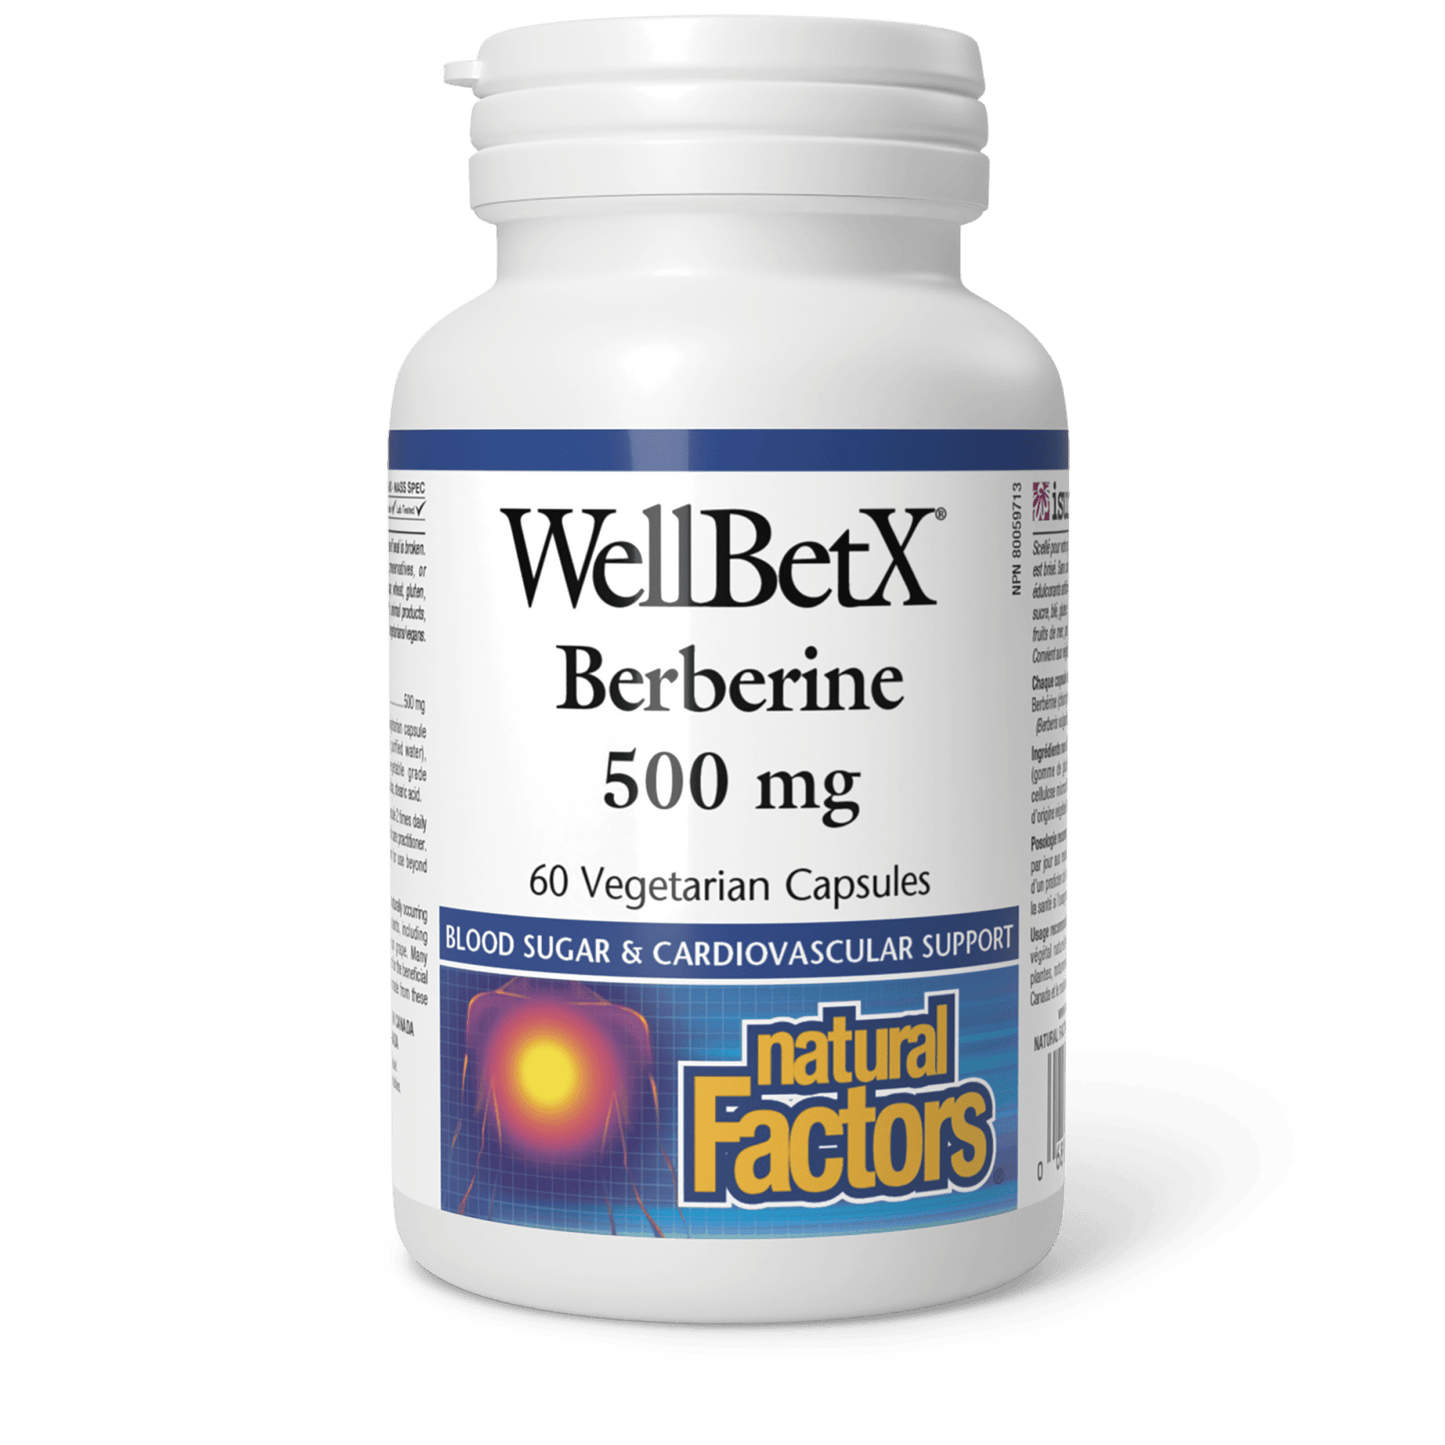 WellBetX Berberine 500 mg, Natural Factors|v|image|3544